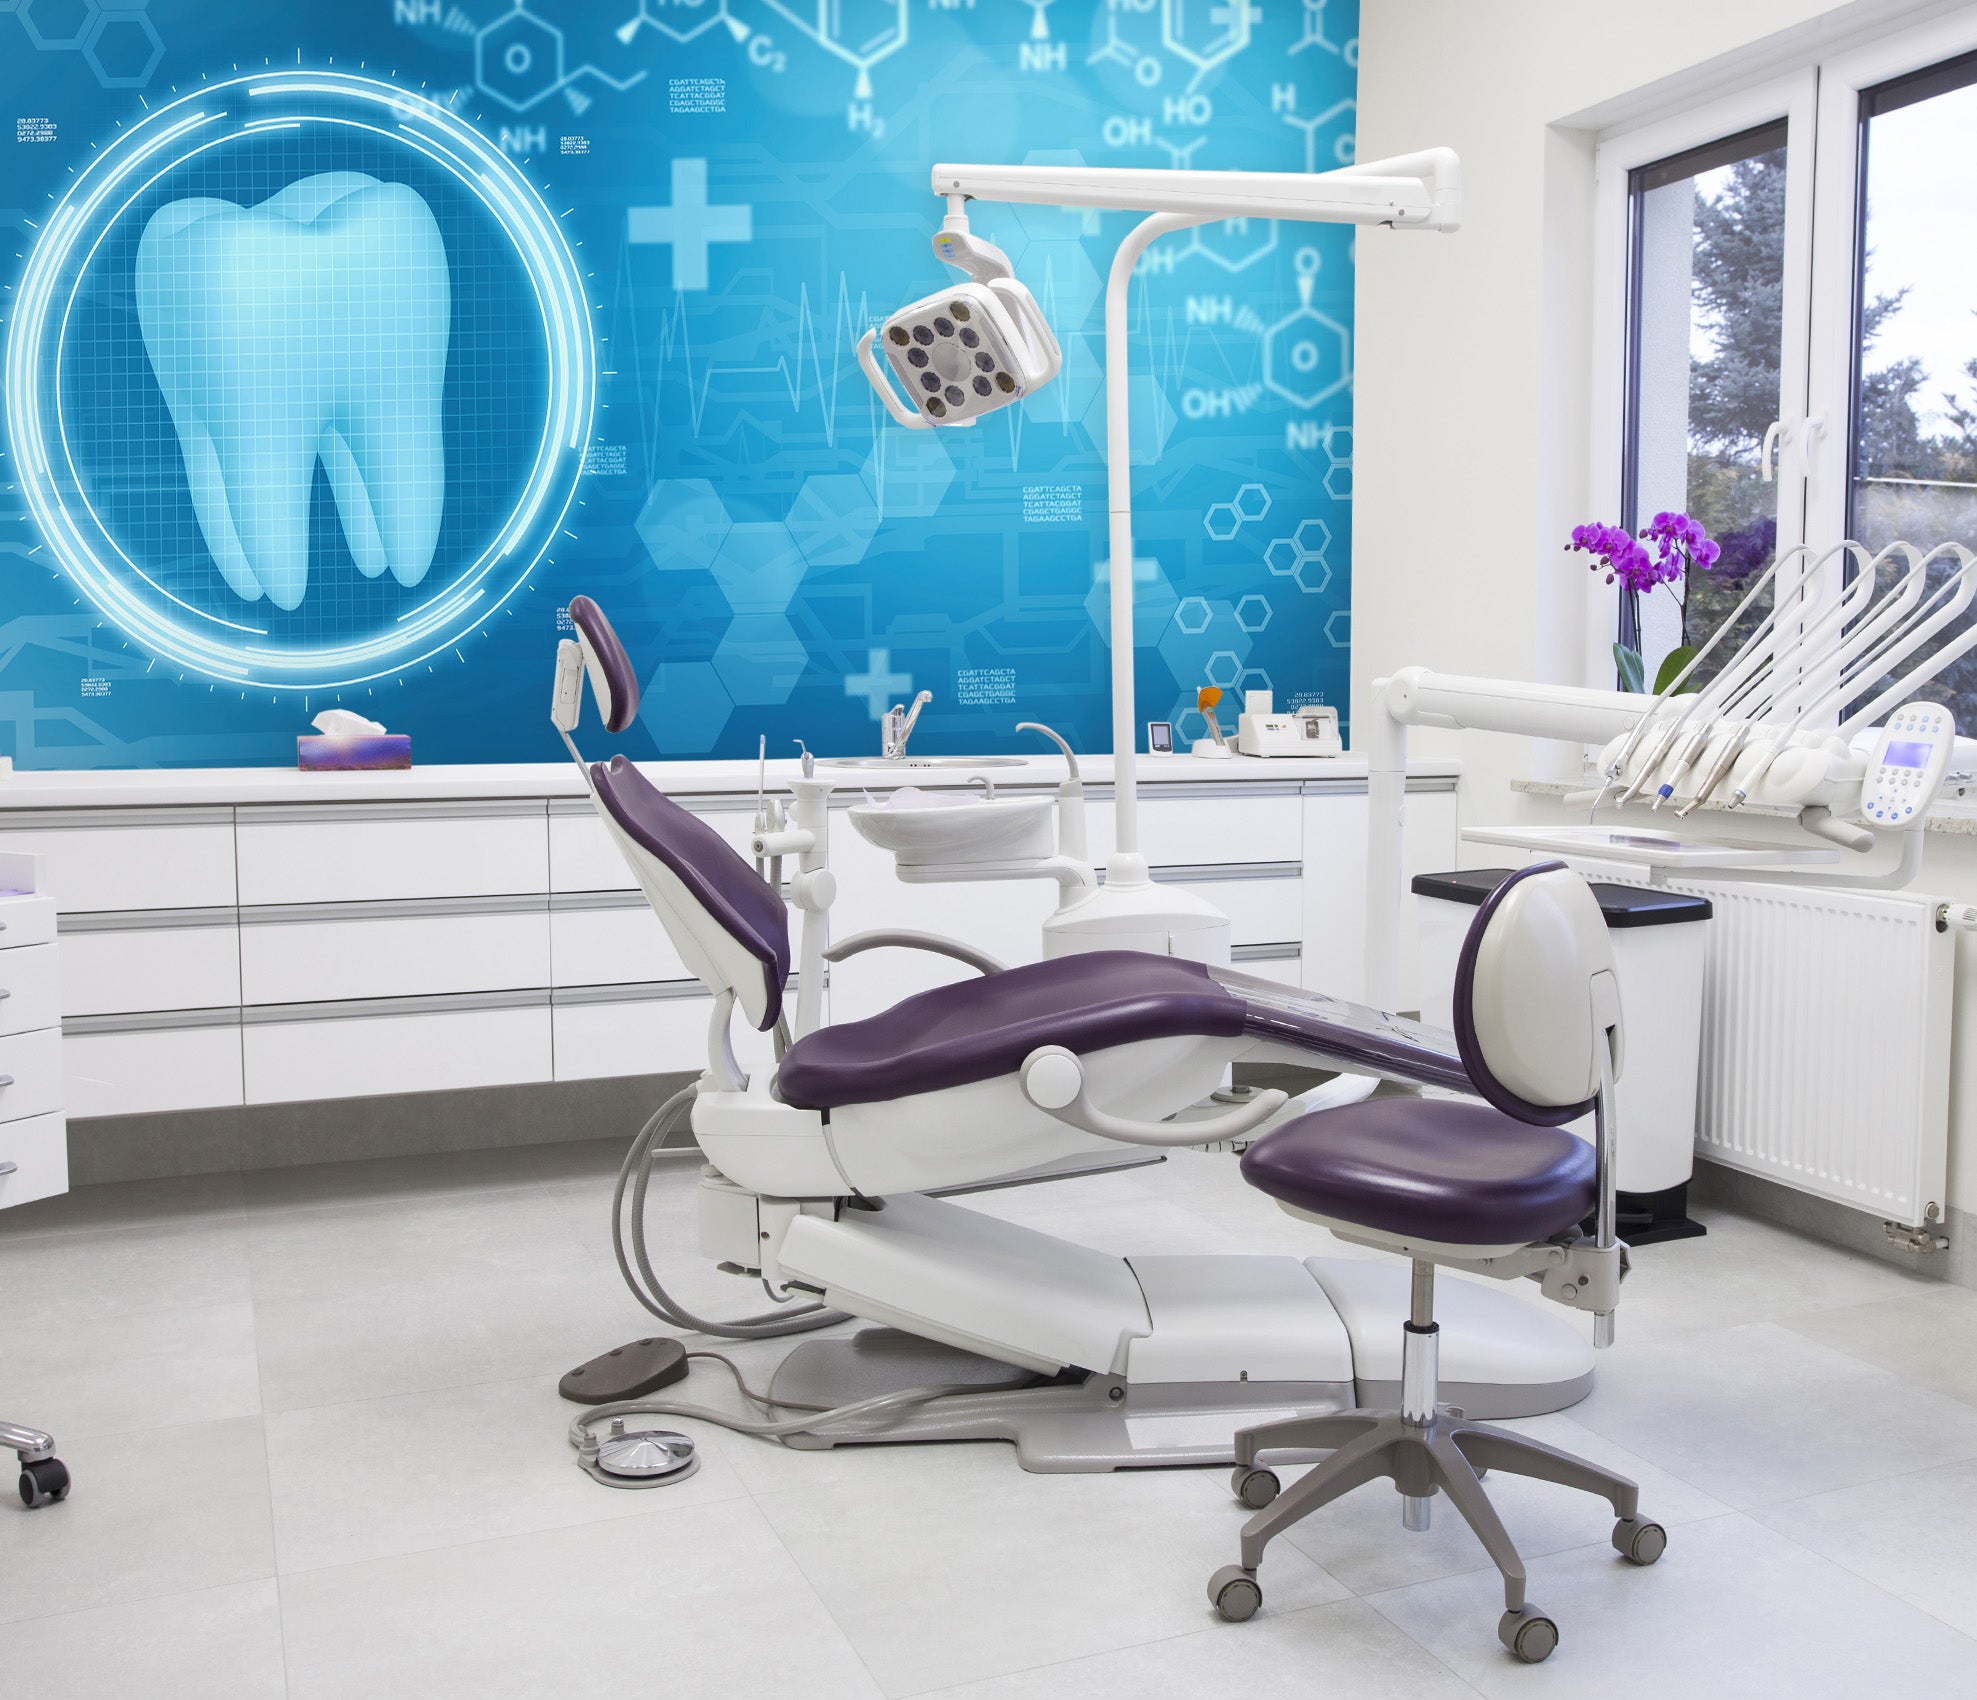 3D Dental Examination 331 Wall Murals